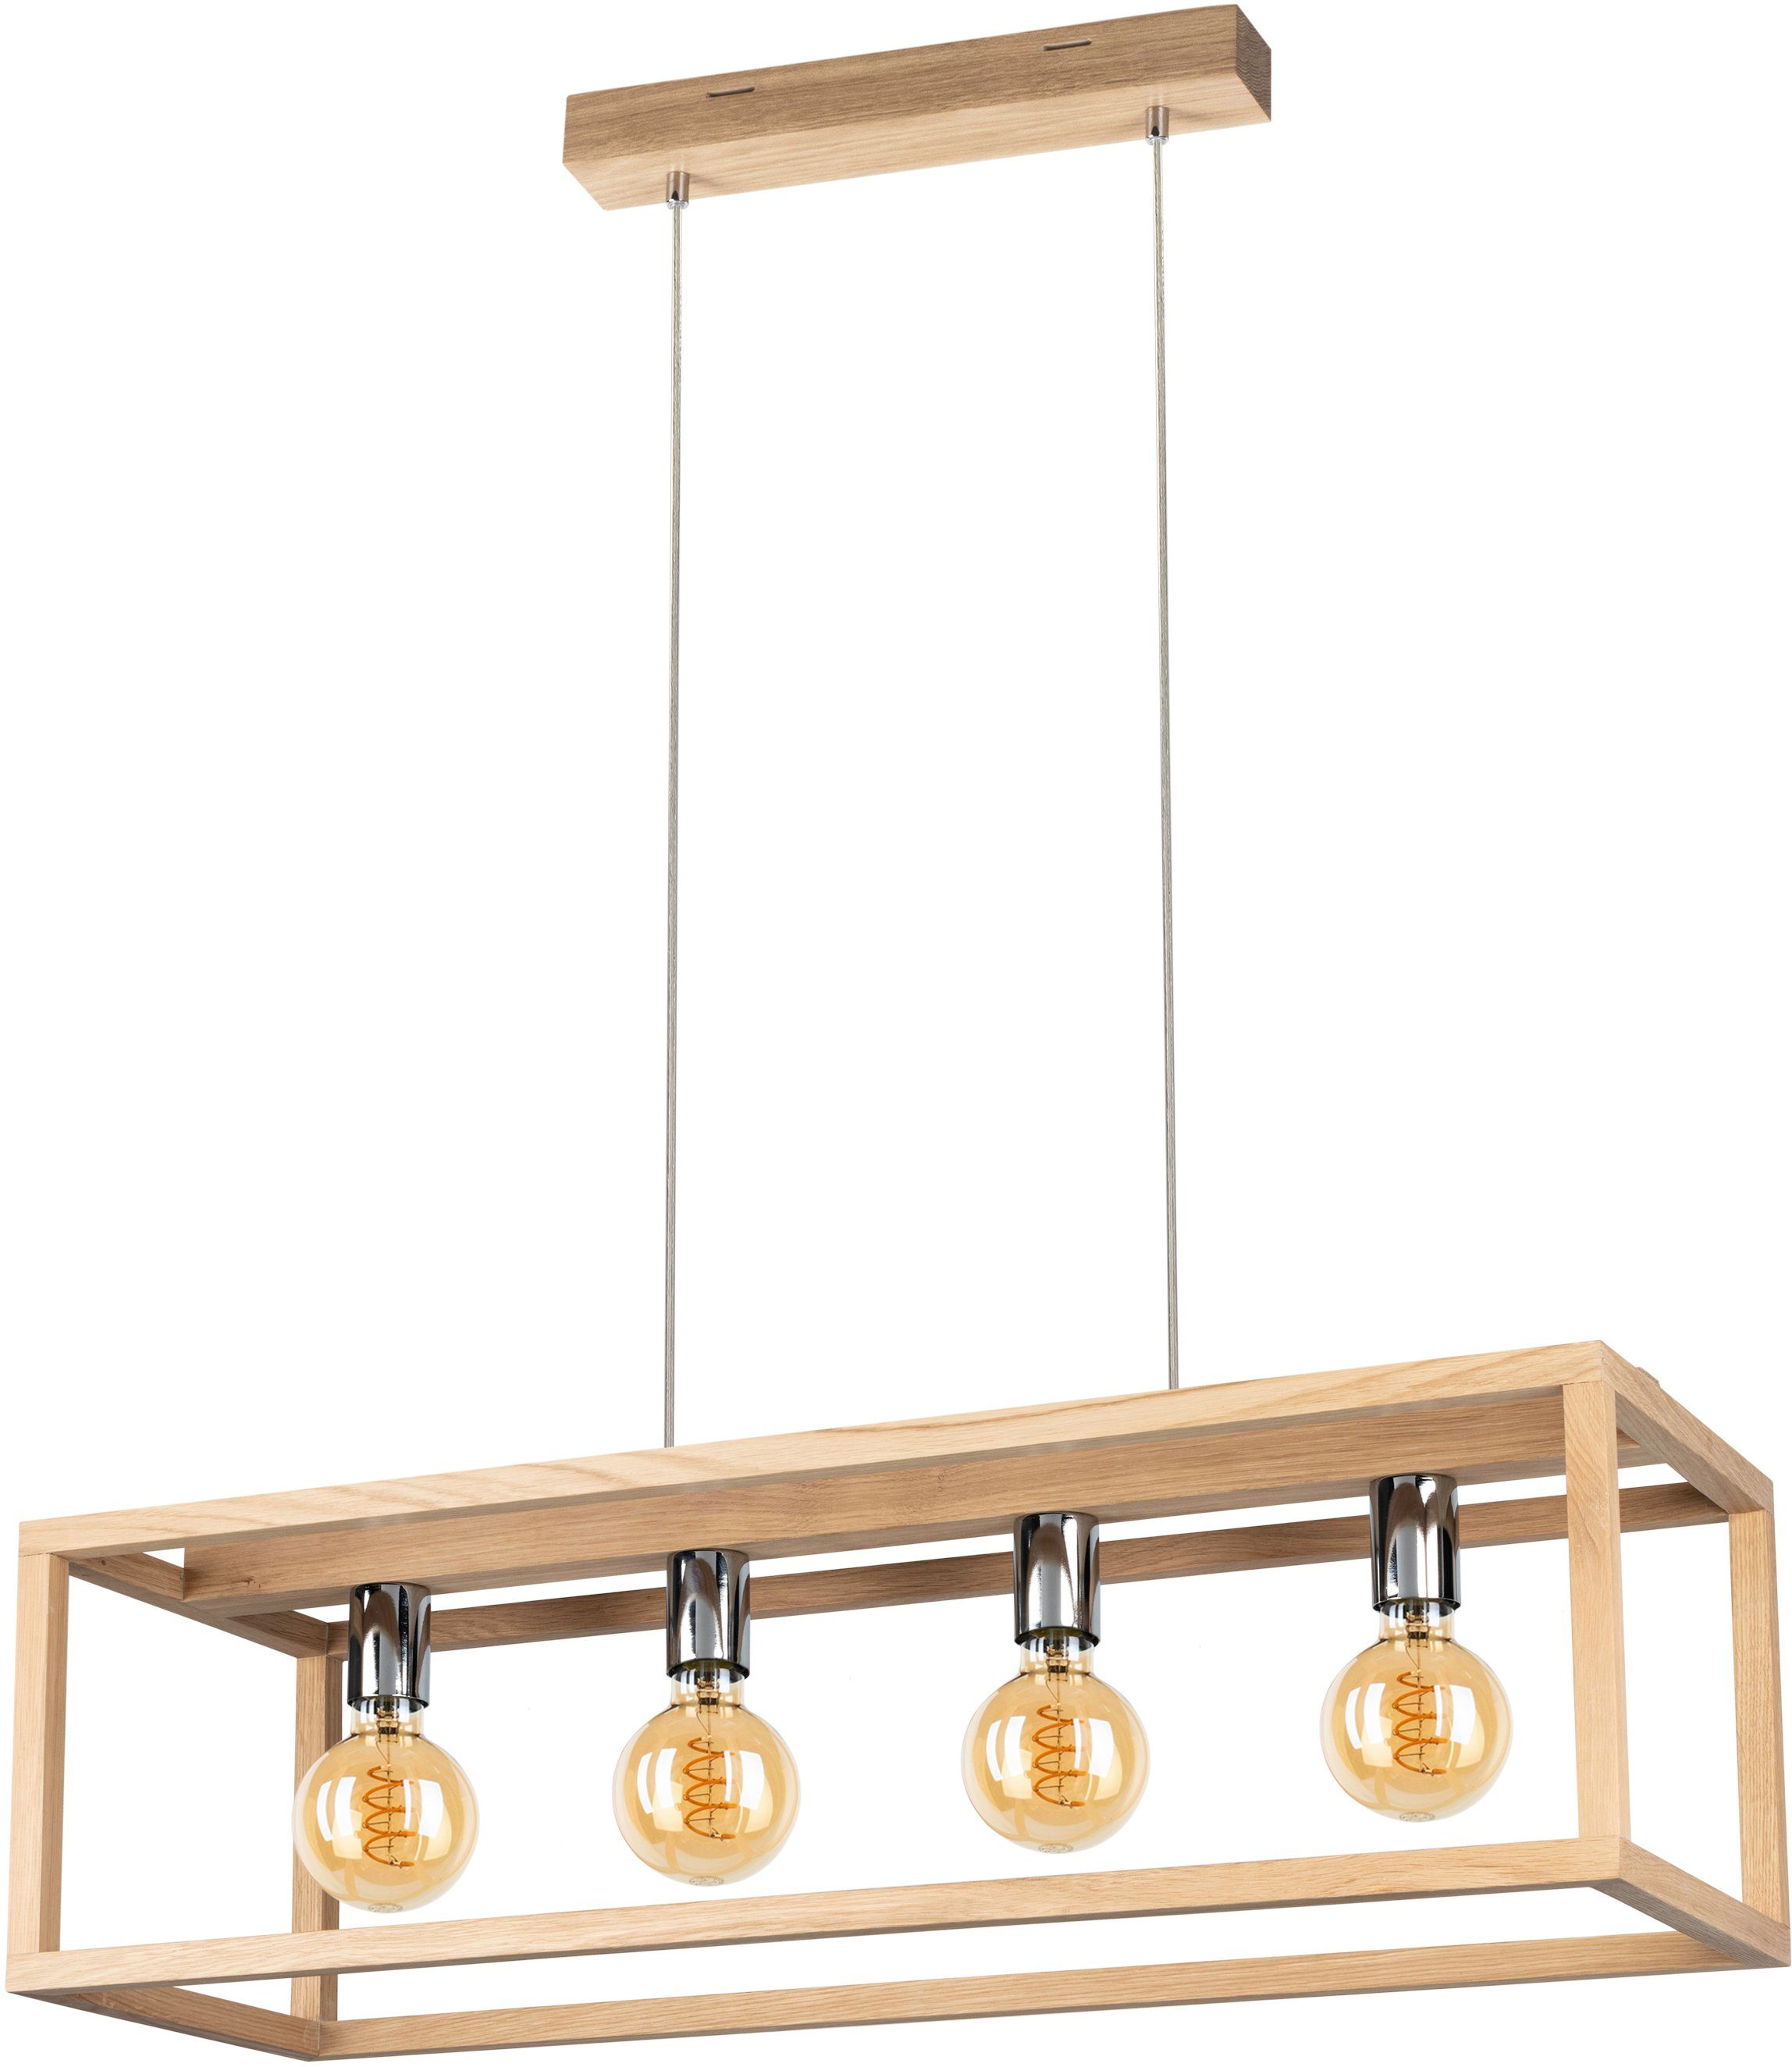 spot light hanglamp kago hanglamp, natuurproduct van eikenhout, duurzaam bruin